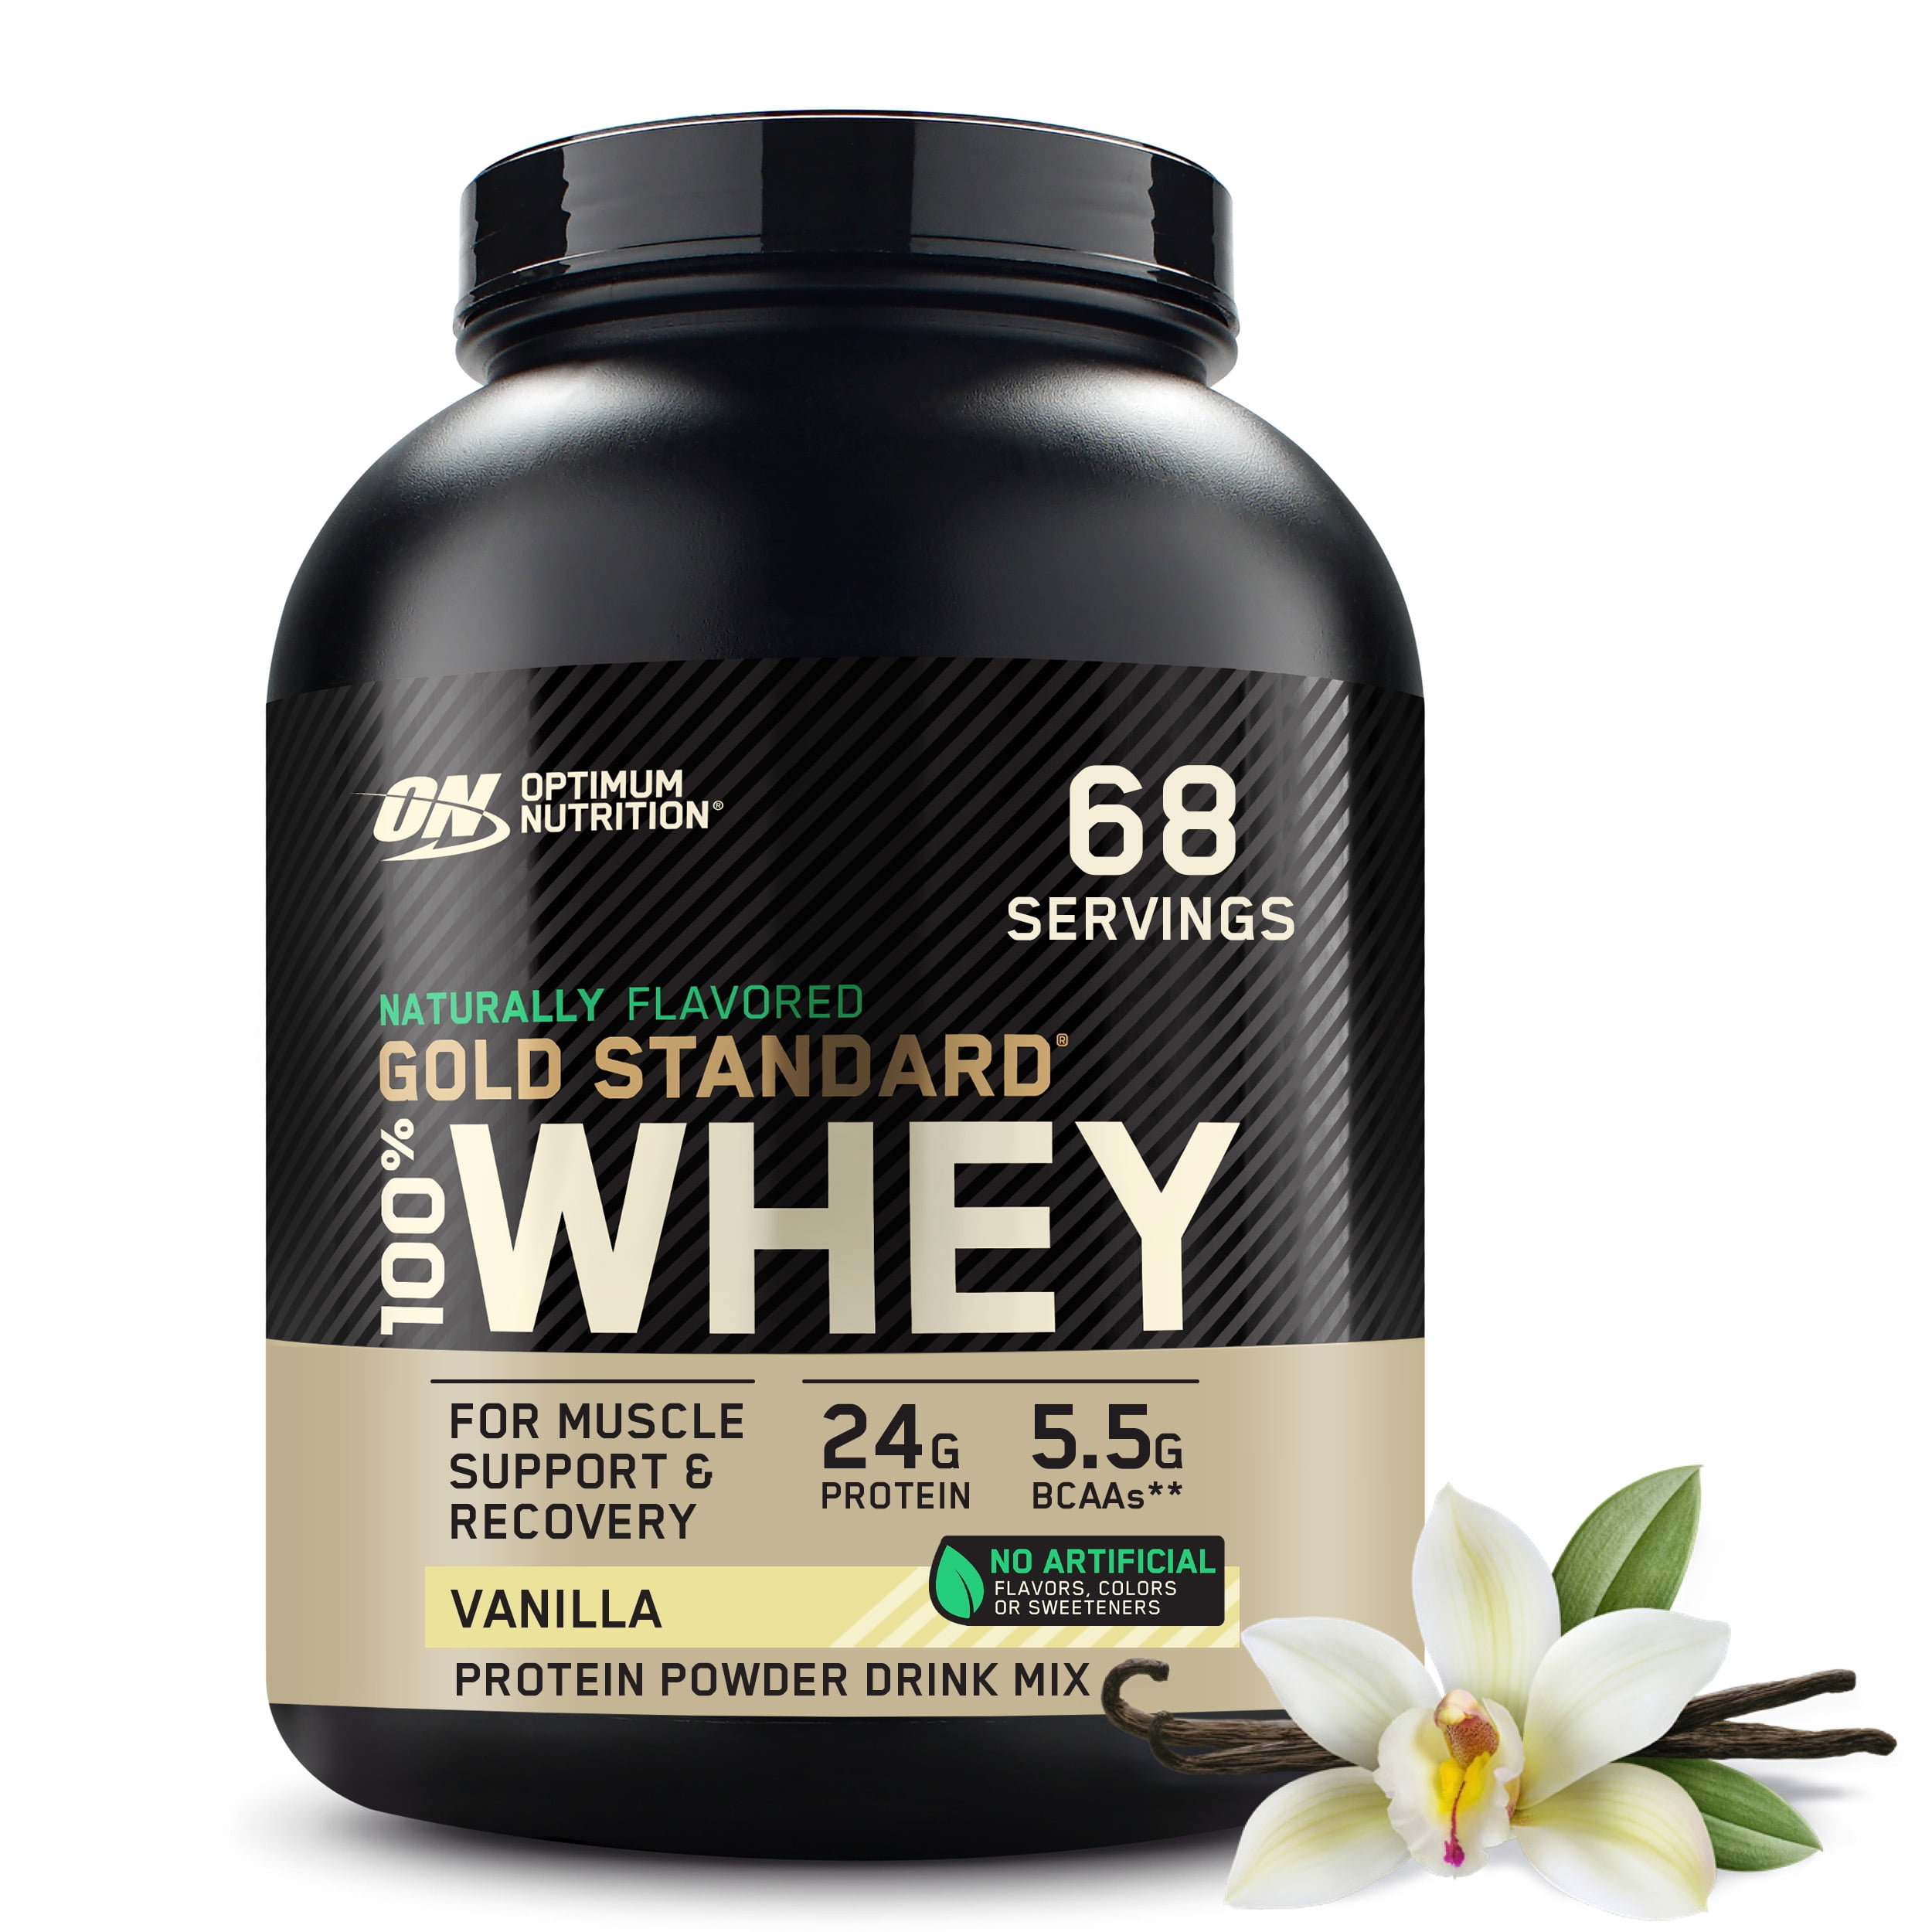 Optimum Nutrition debuts Gold Standard whey protein drink - FoodBev Media